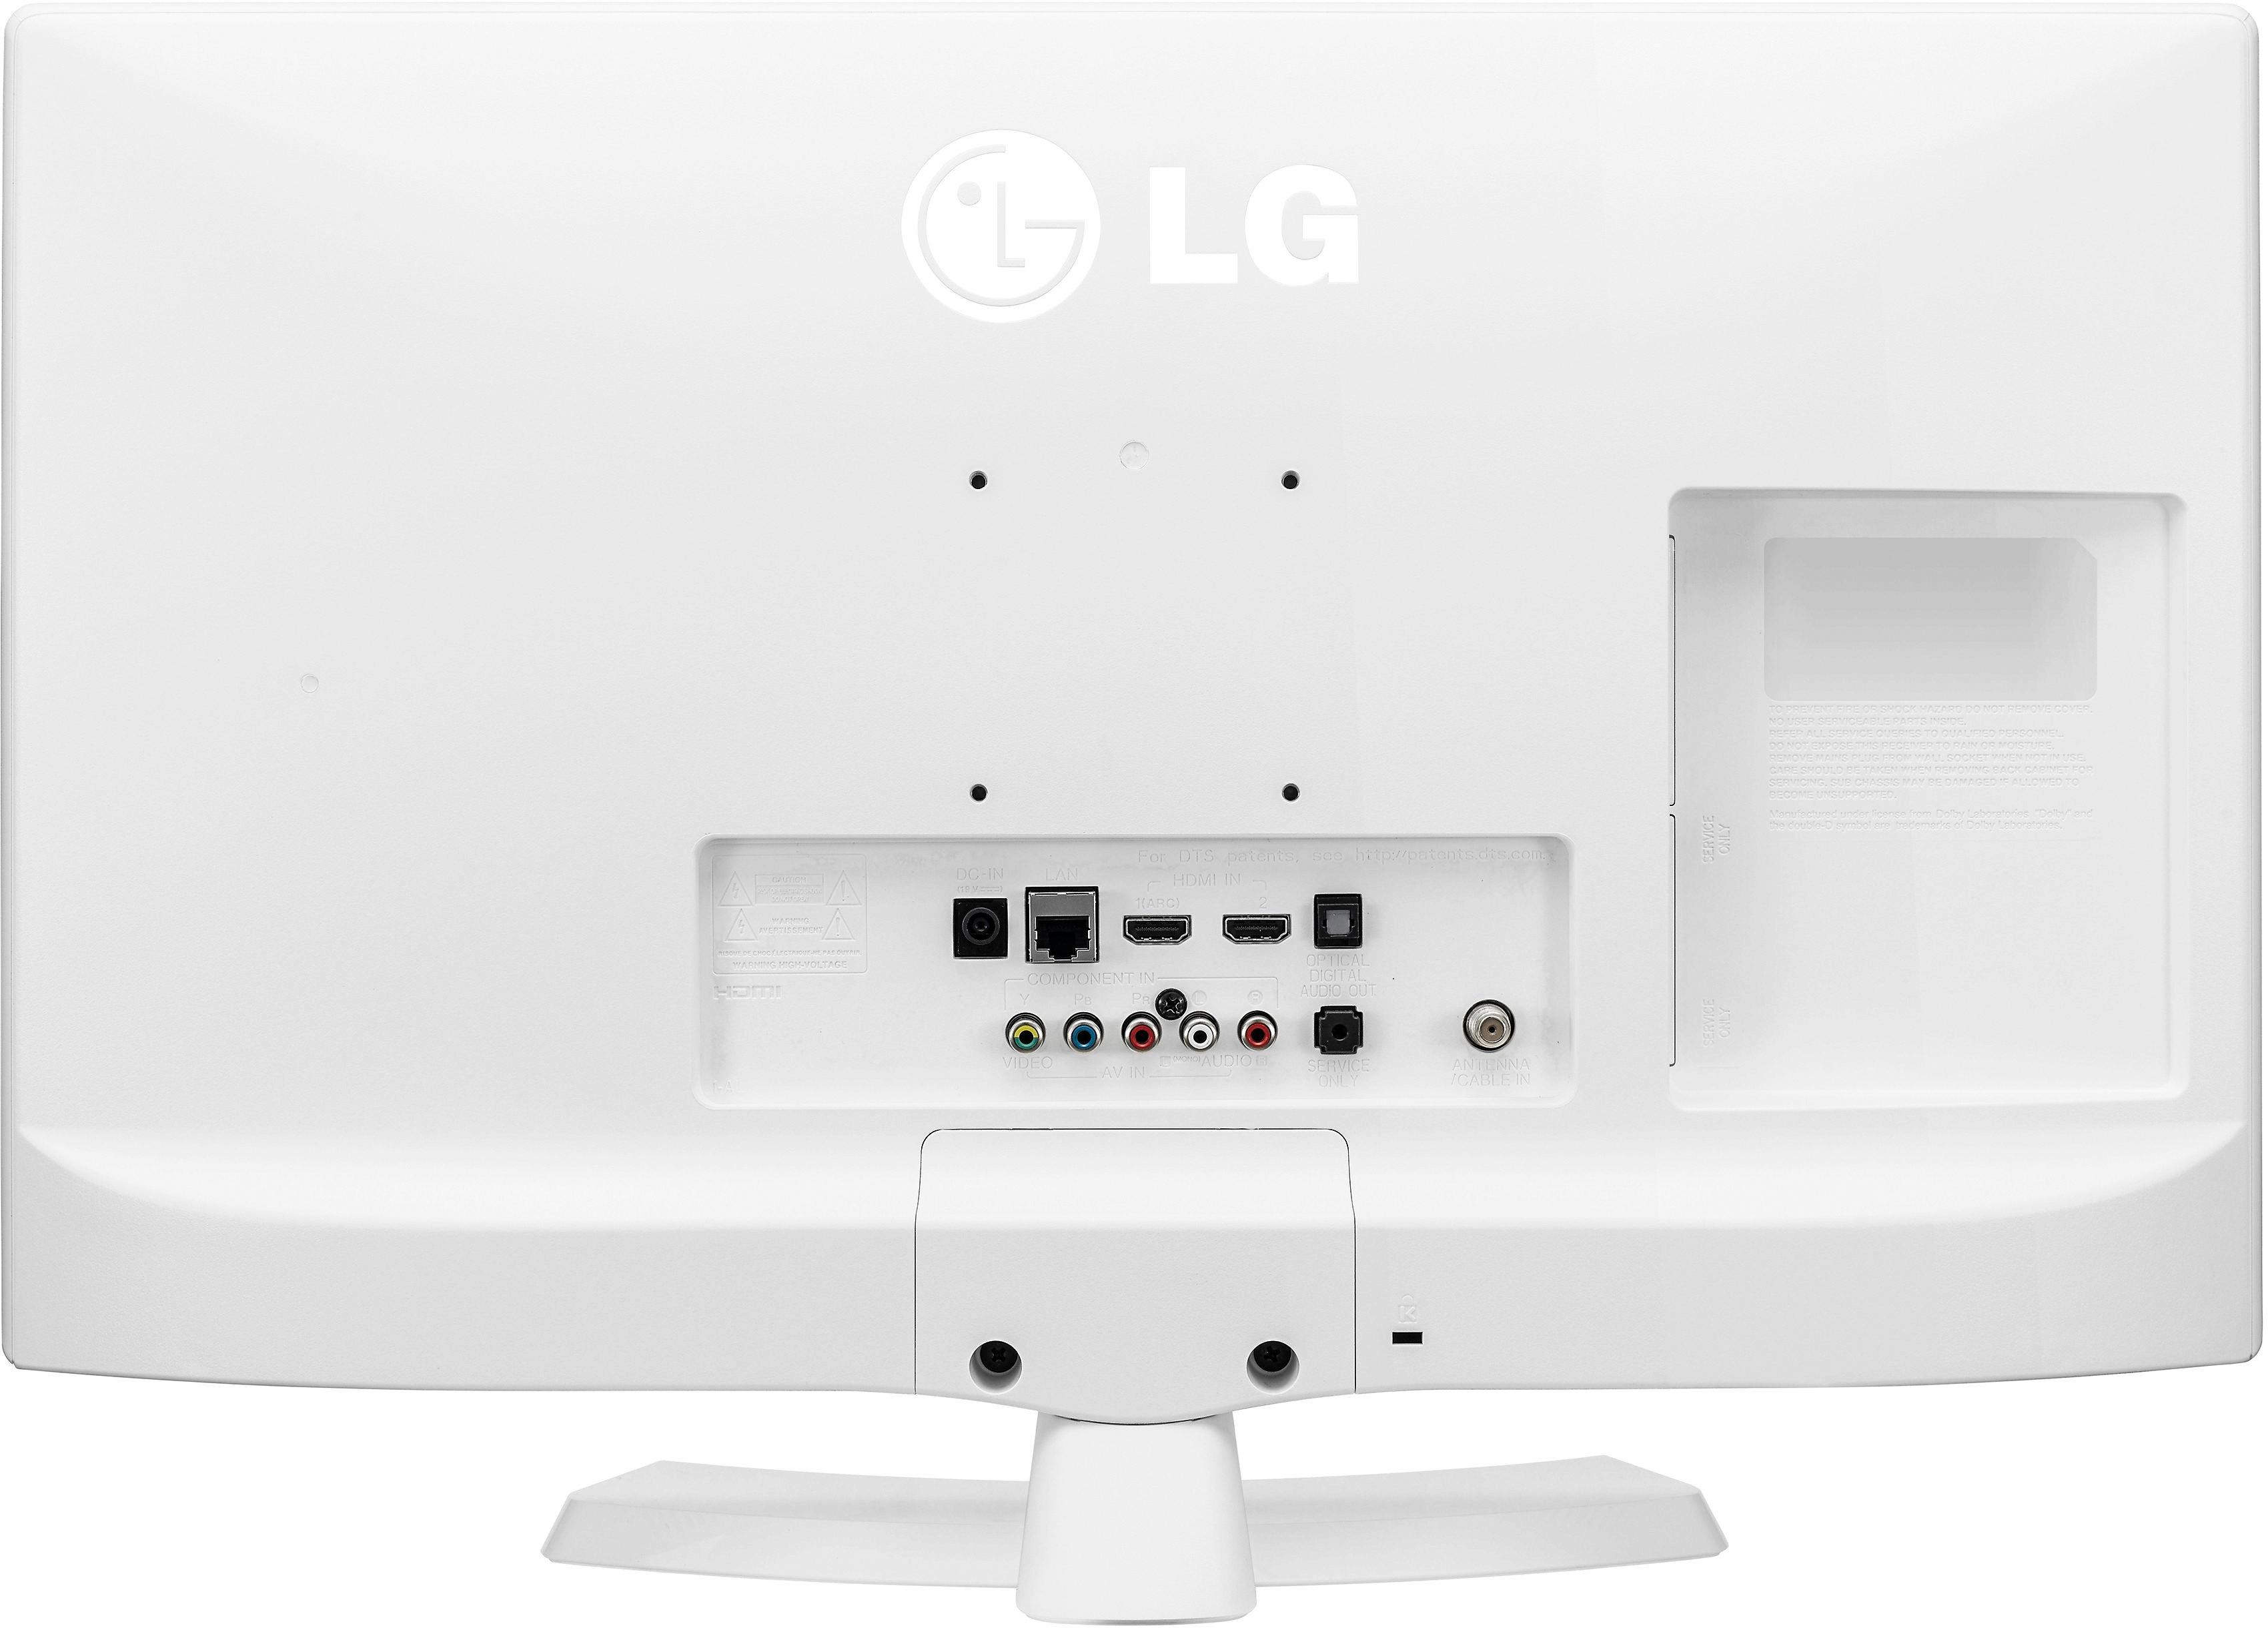 LG 24 Class LED 720p Smart HDTV 24LJ4840-WU - Best Buy